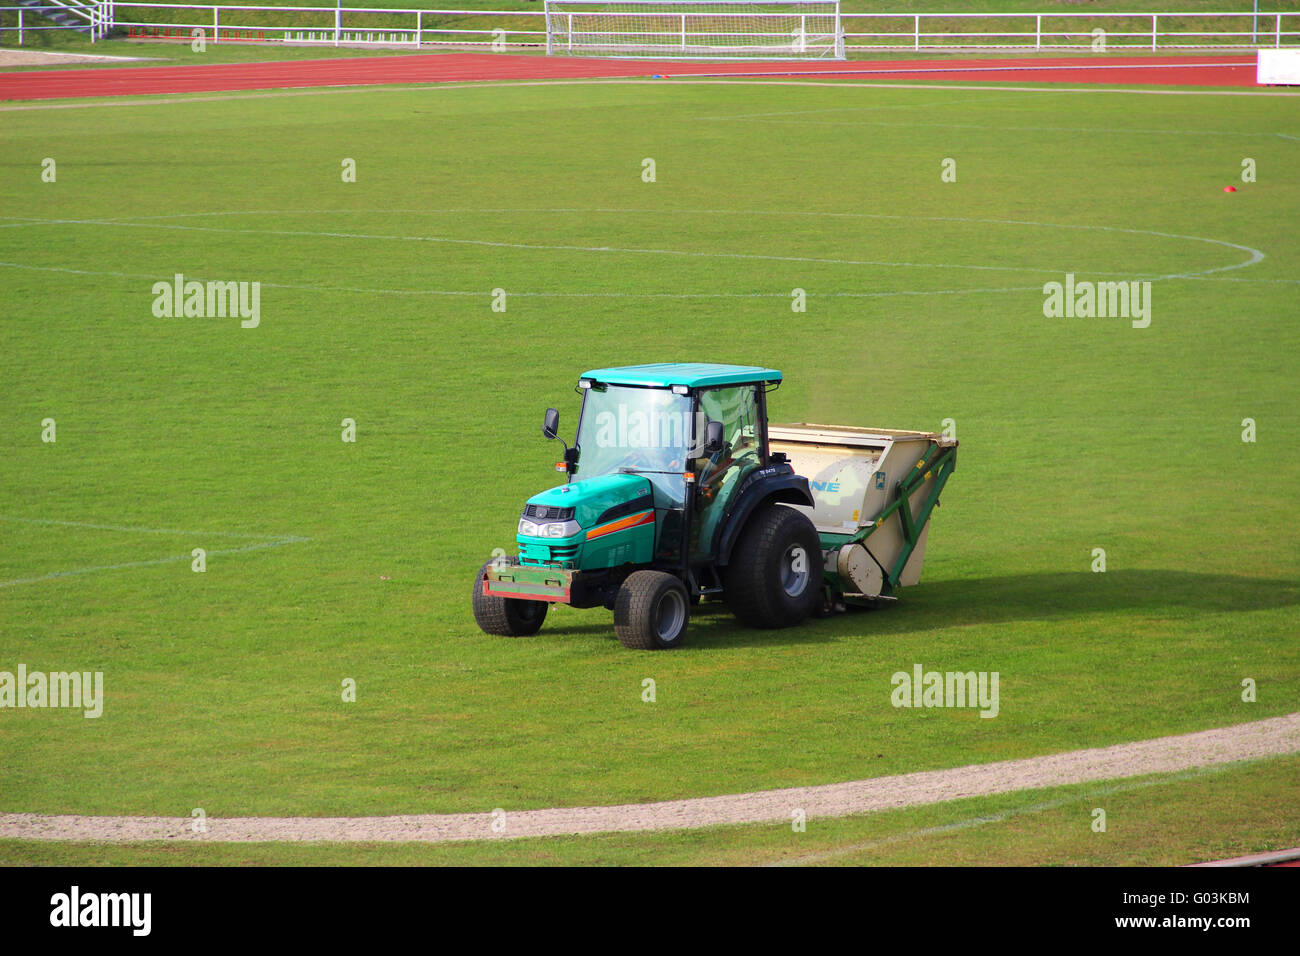 lawn care in football stadium; sports stadium Stock Photo